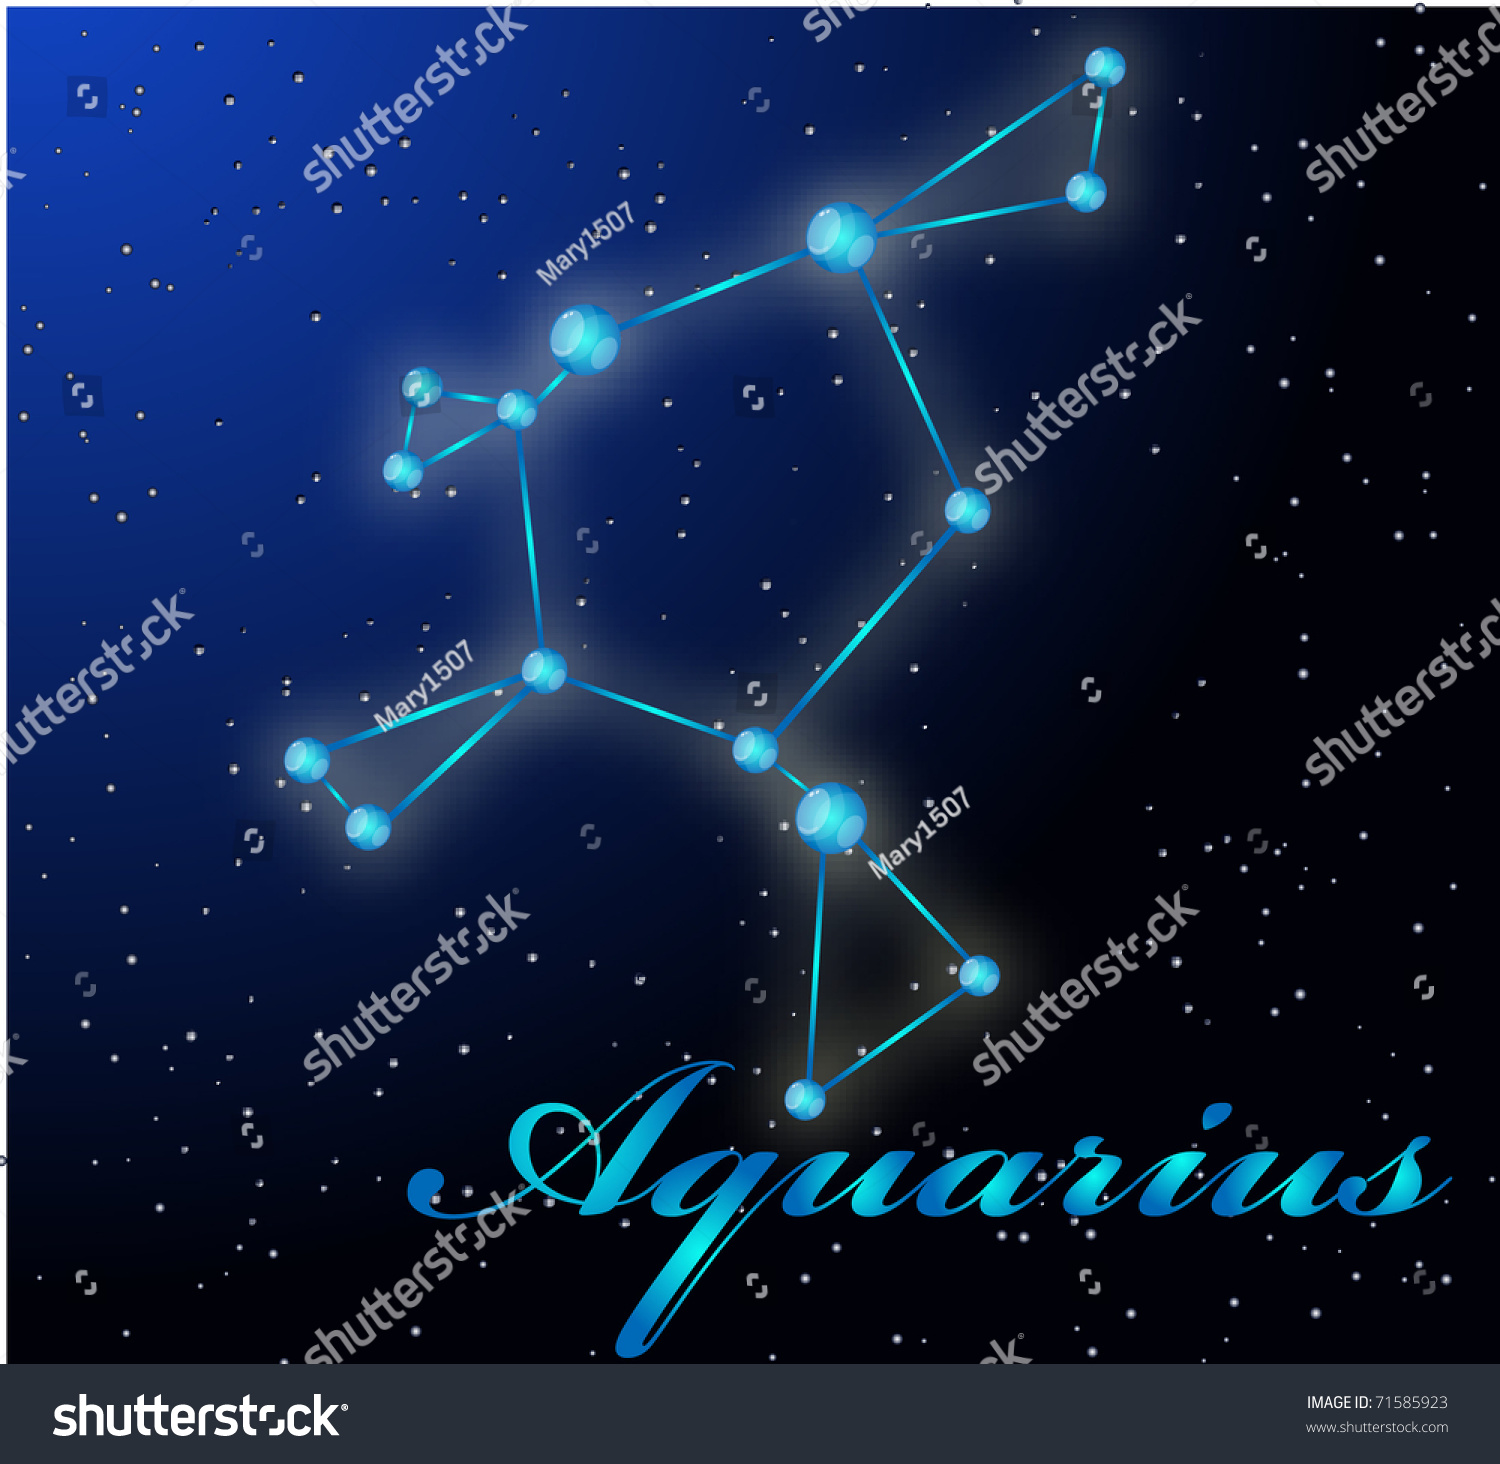 Aquarius Astrological Horoscope Stock Vector 71585923 - Shutterstock